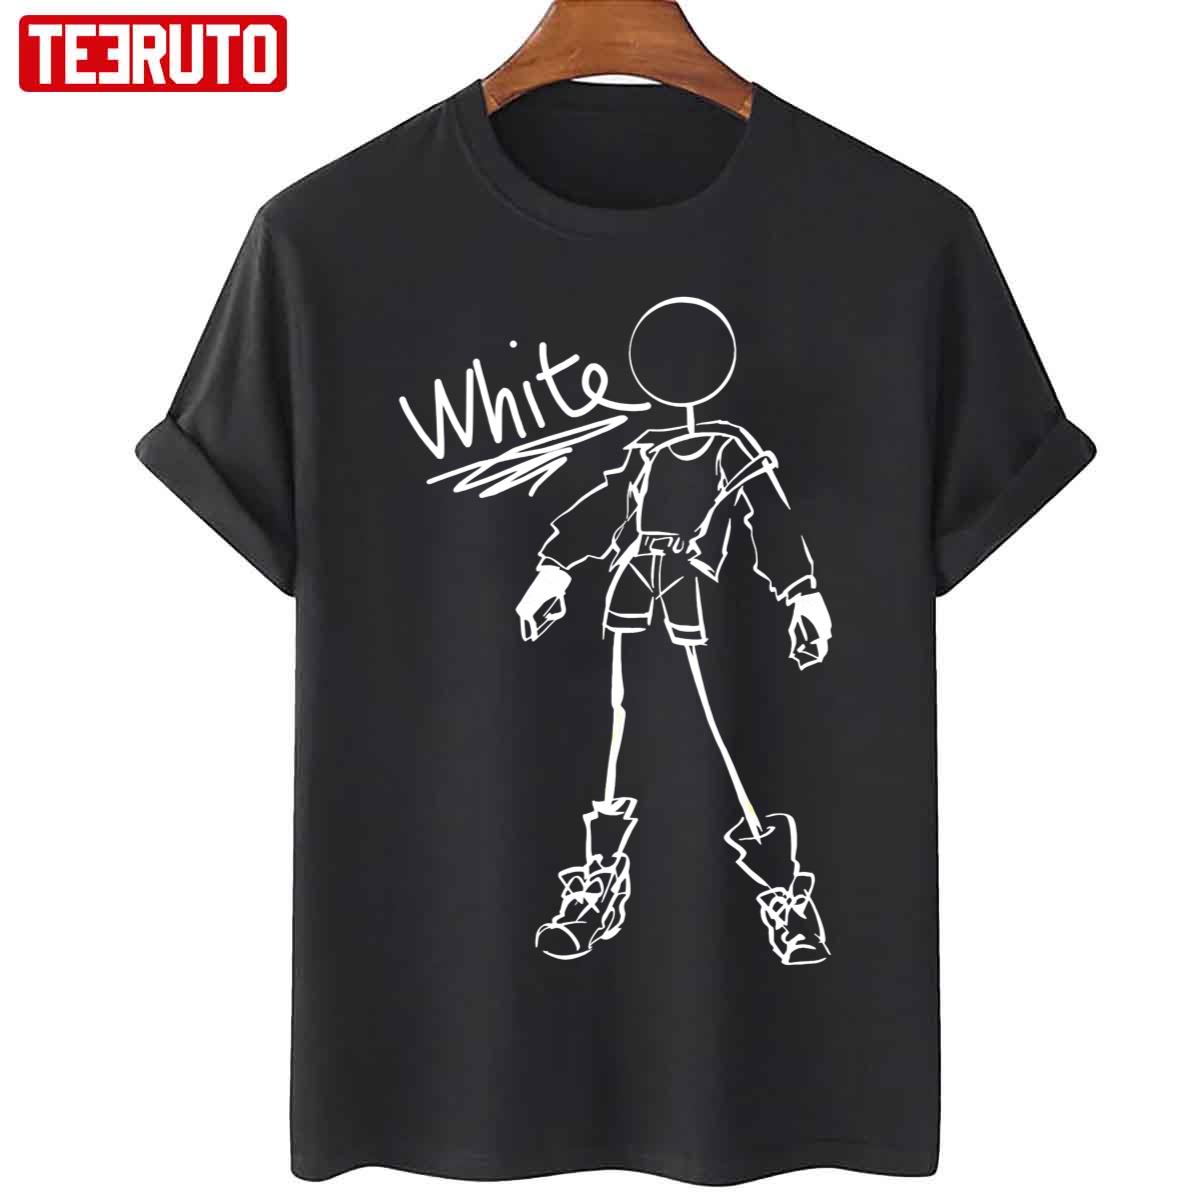 Alan Animation Becker White Unisex T-Shirt